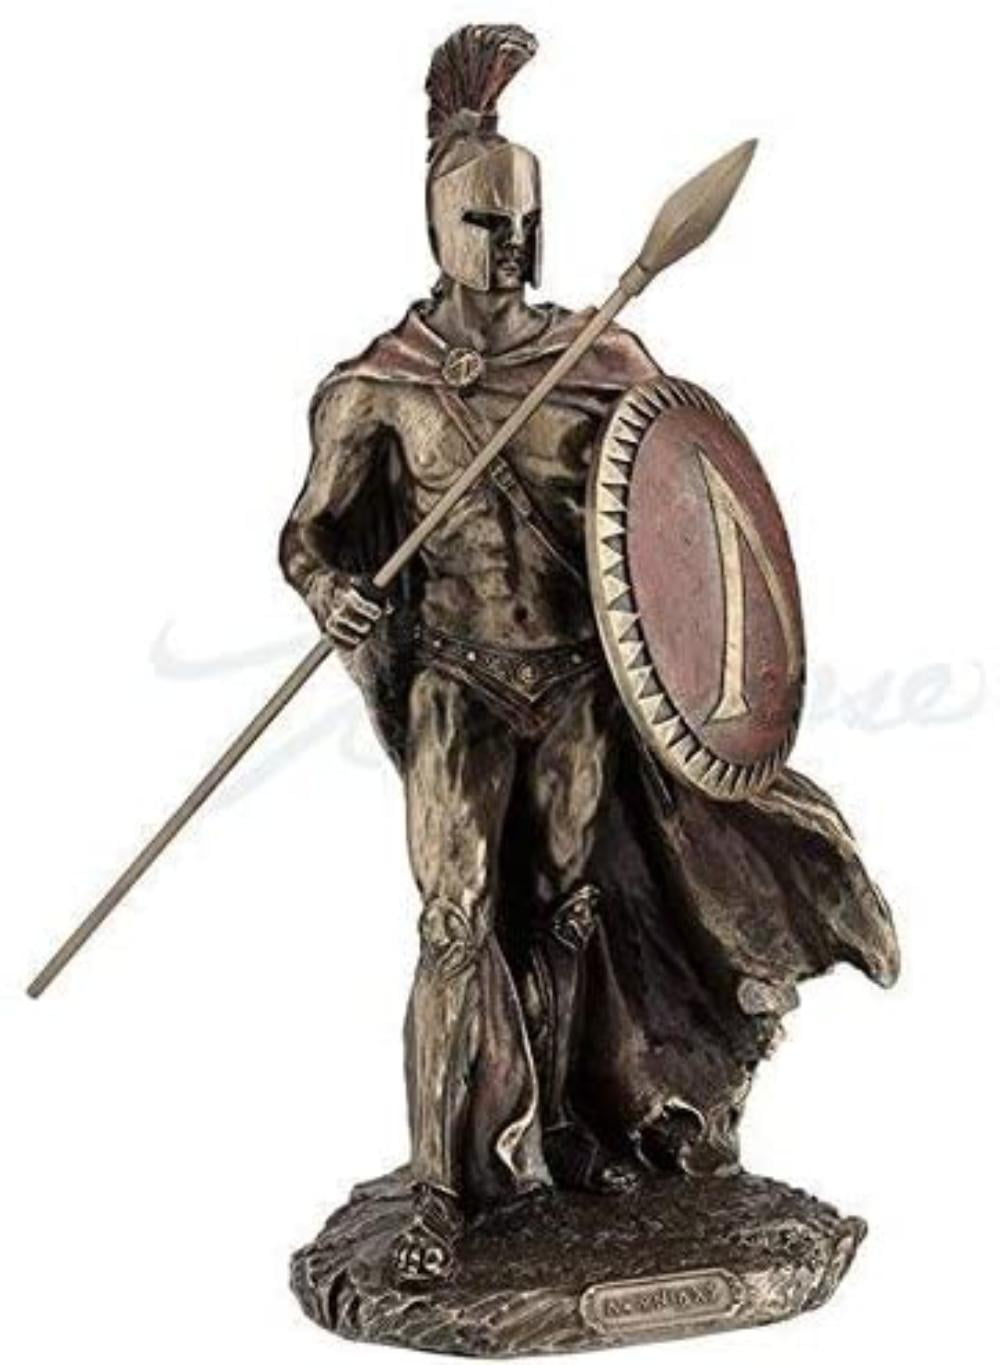 Leonidas Spartan King With Spear Shield Statue Leonidas Spartan King With Spear Sculpture By Brand Veronese Walmart Com Walmart Com